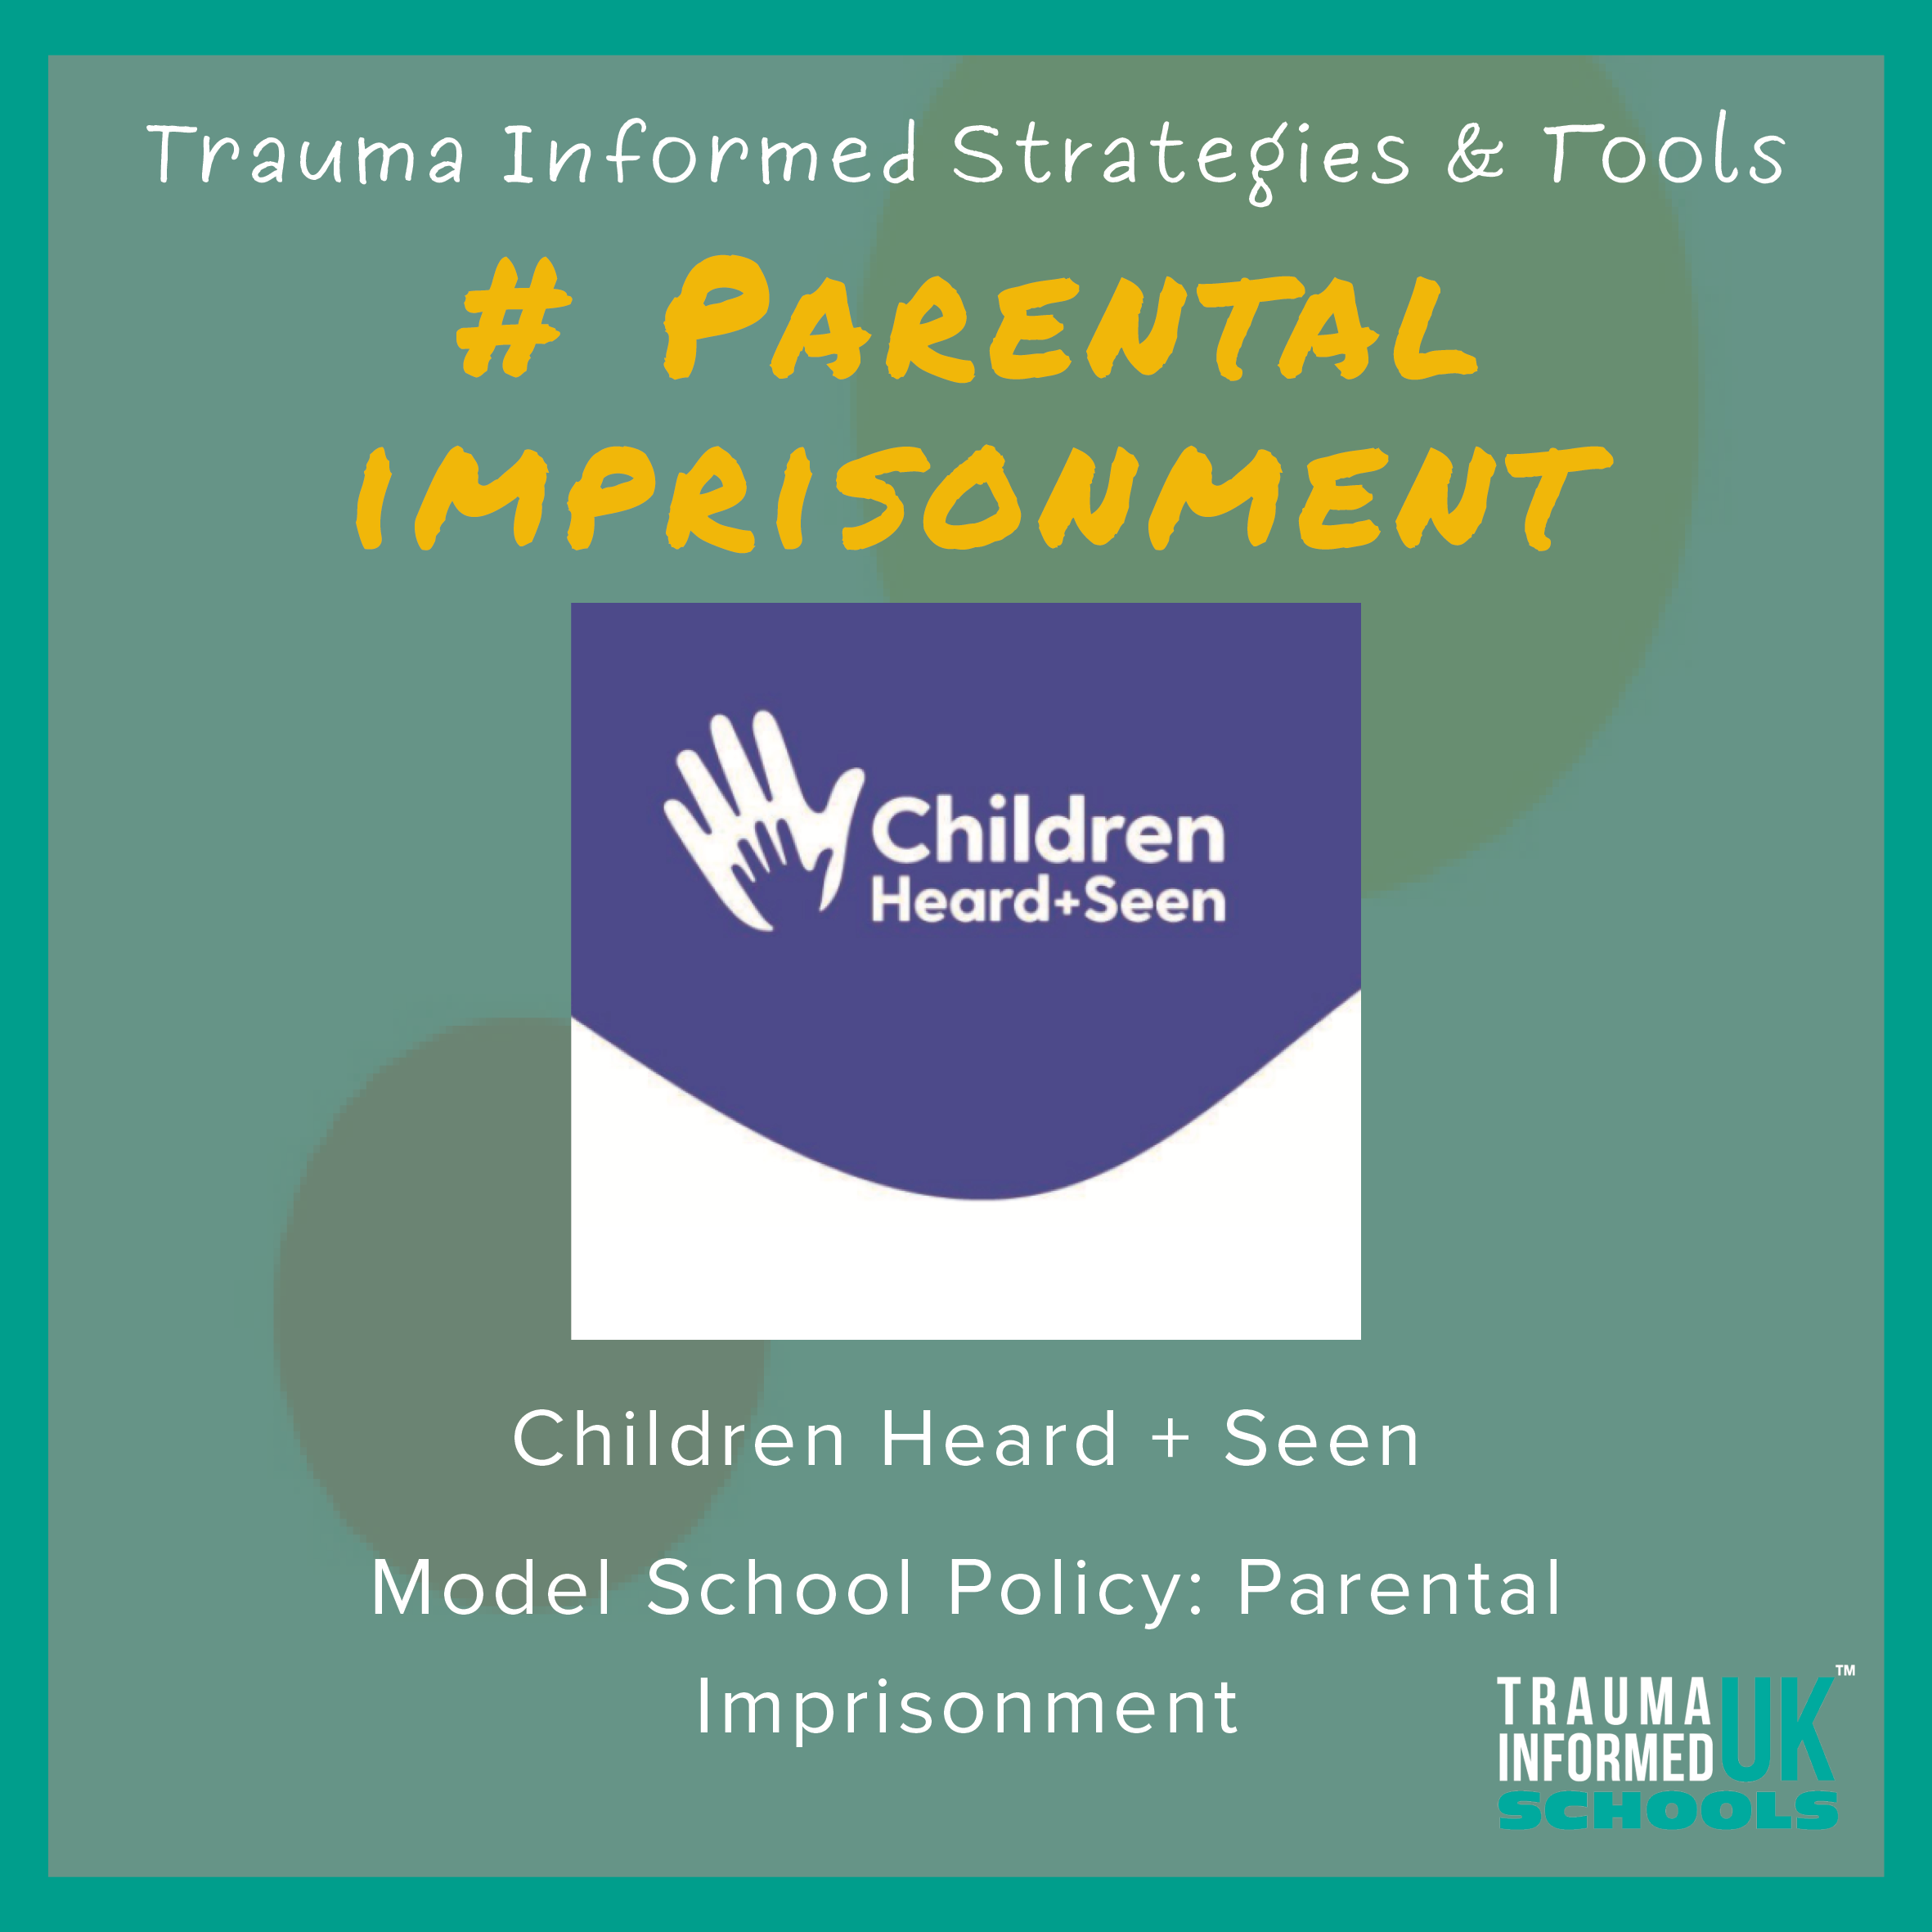 Trauma Informed Tools and Strategies Parental Improisonment